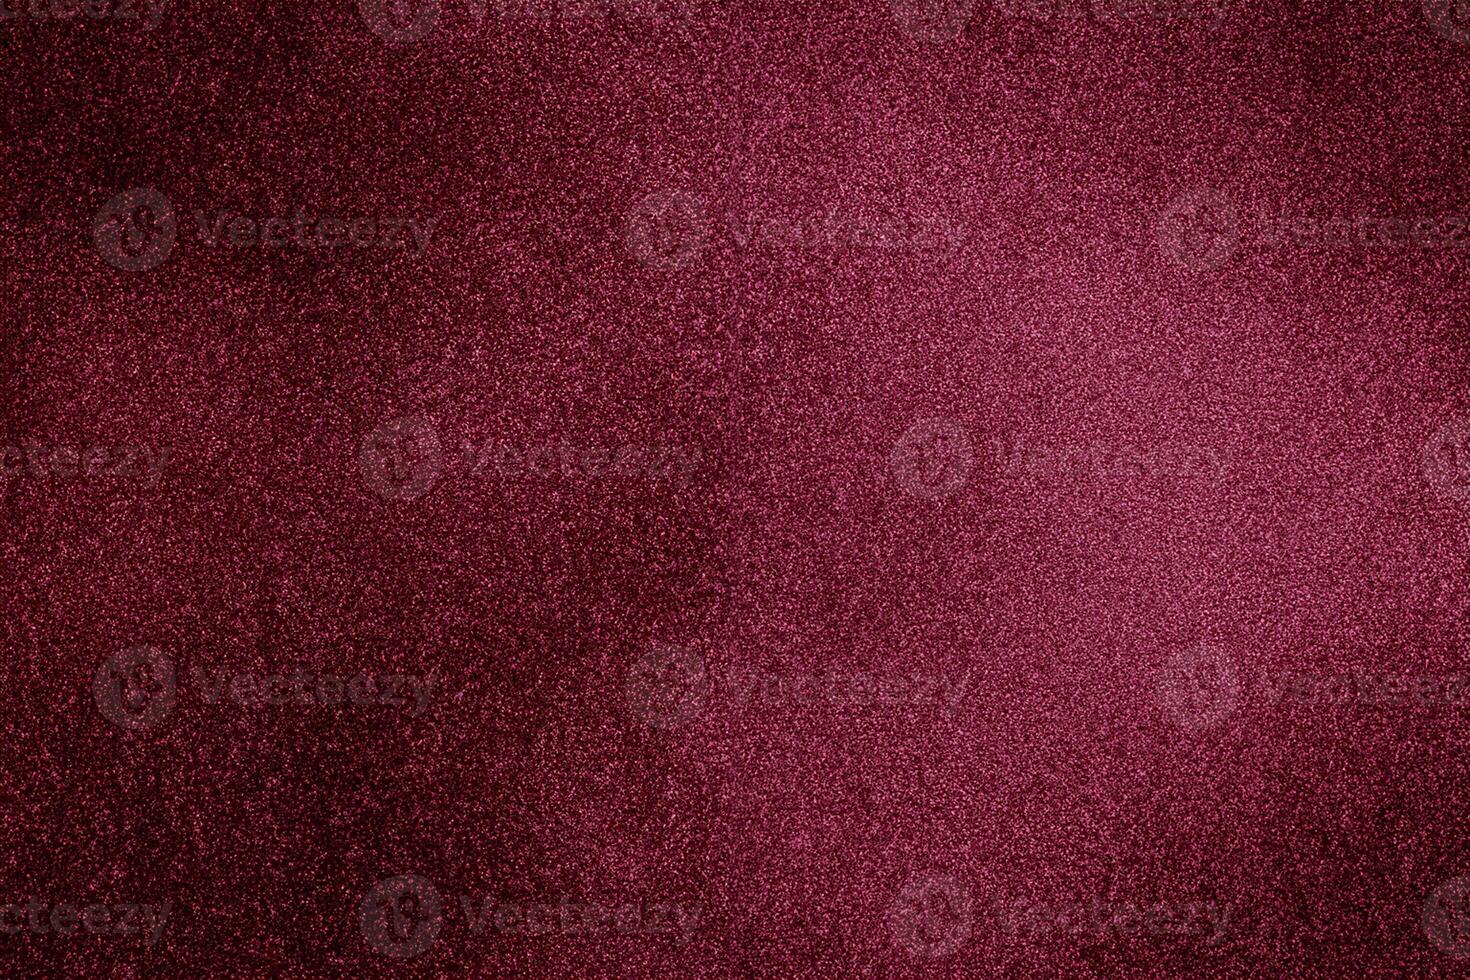 Purple red grunge wall background photo